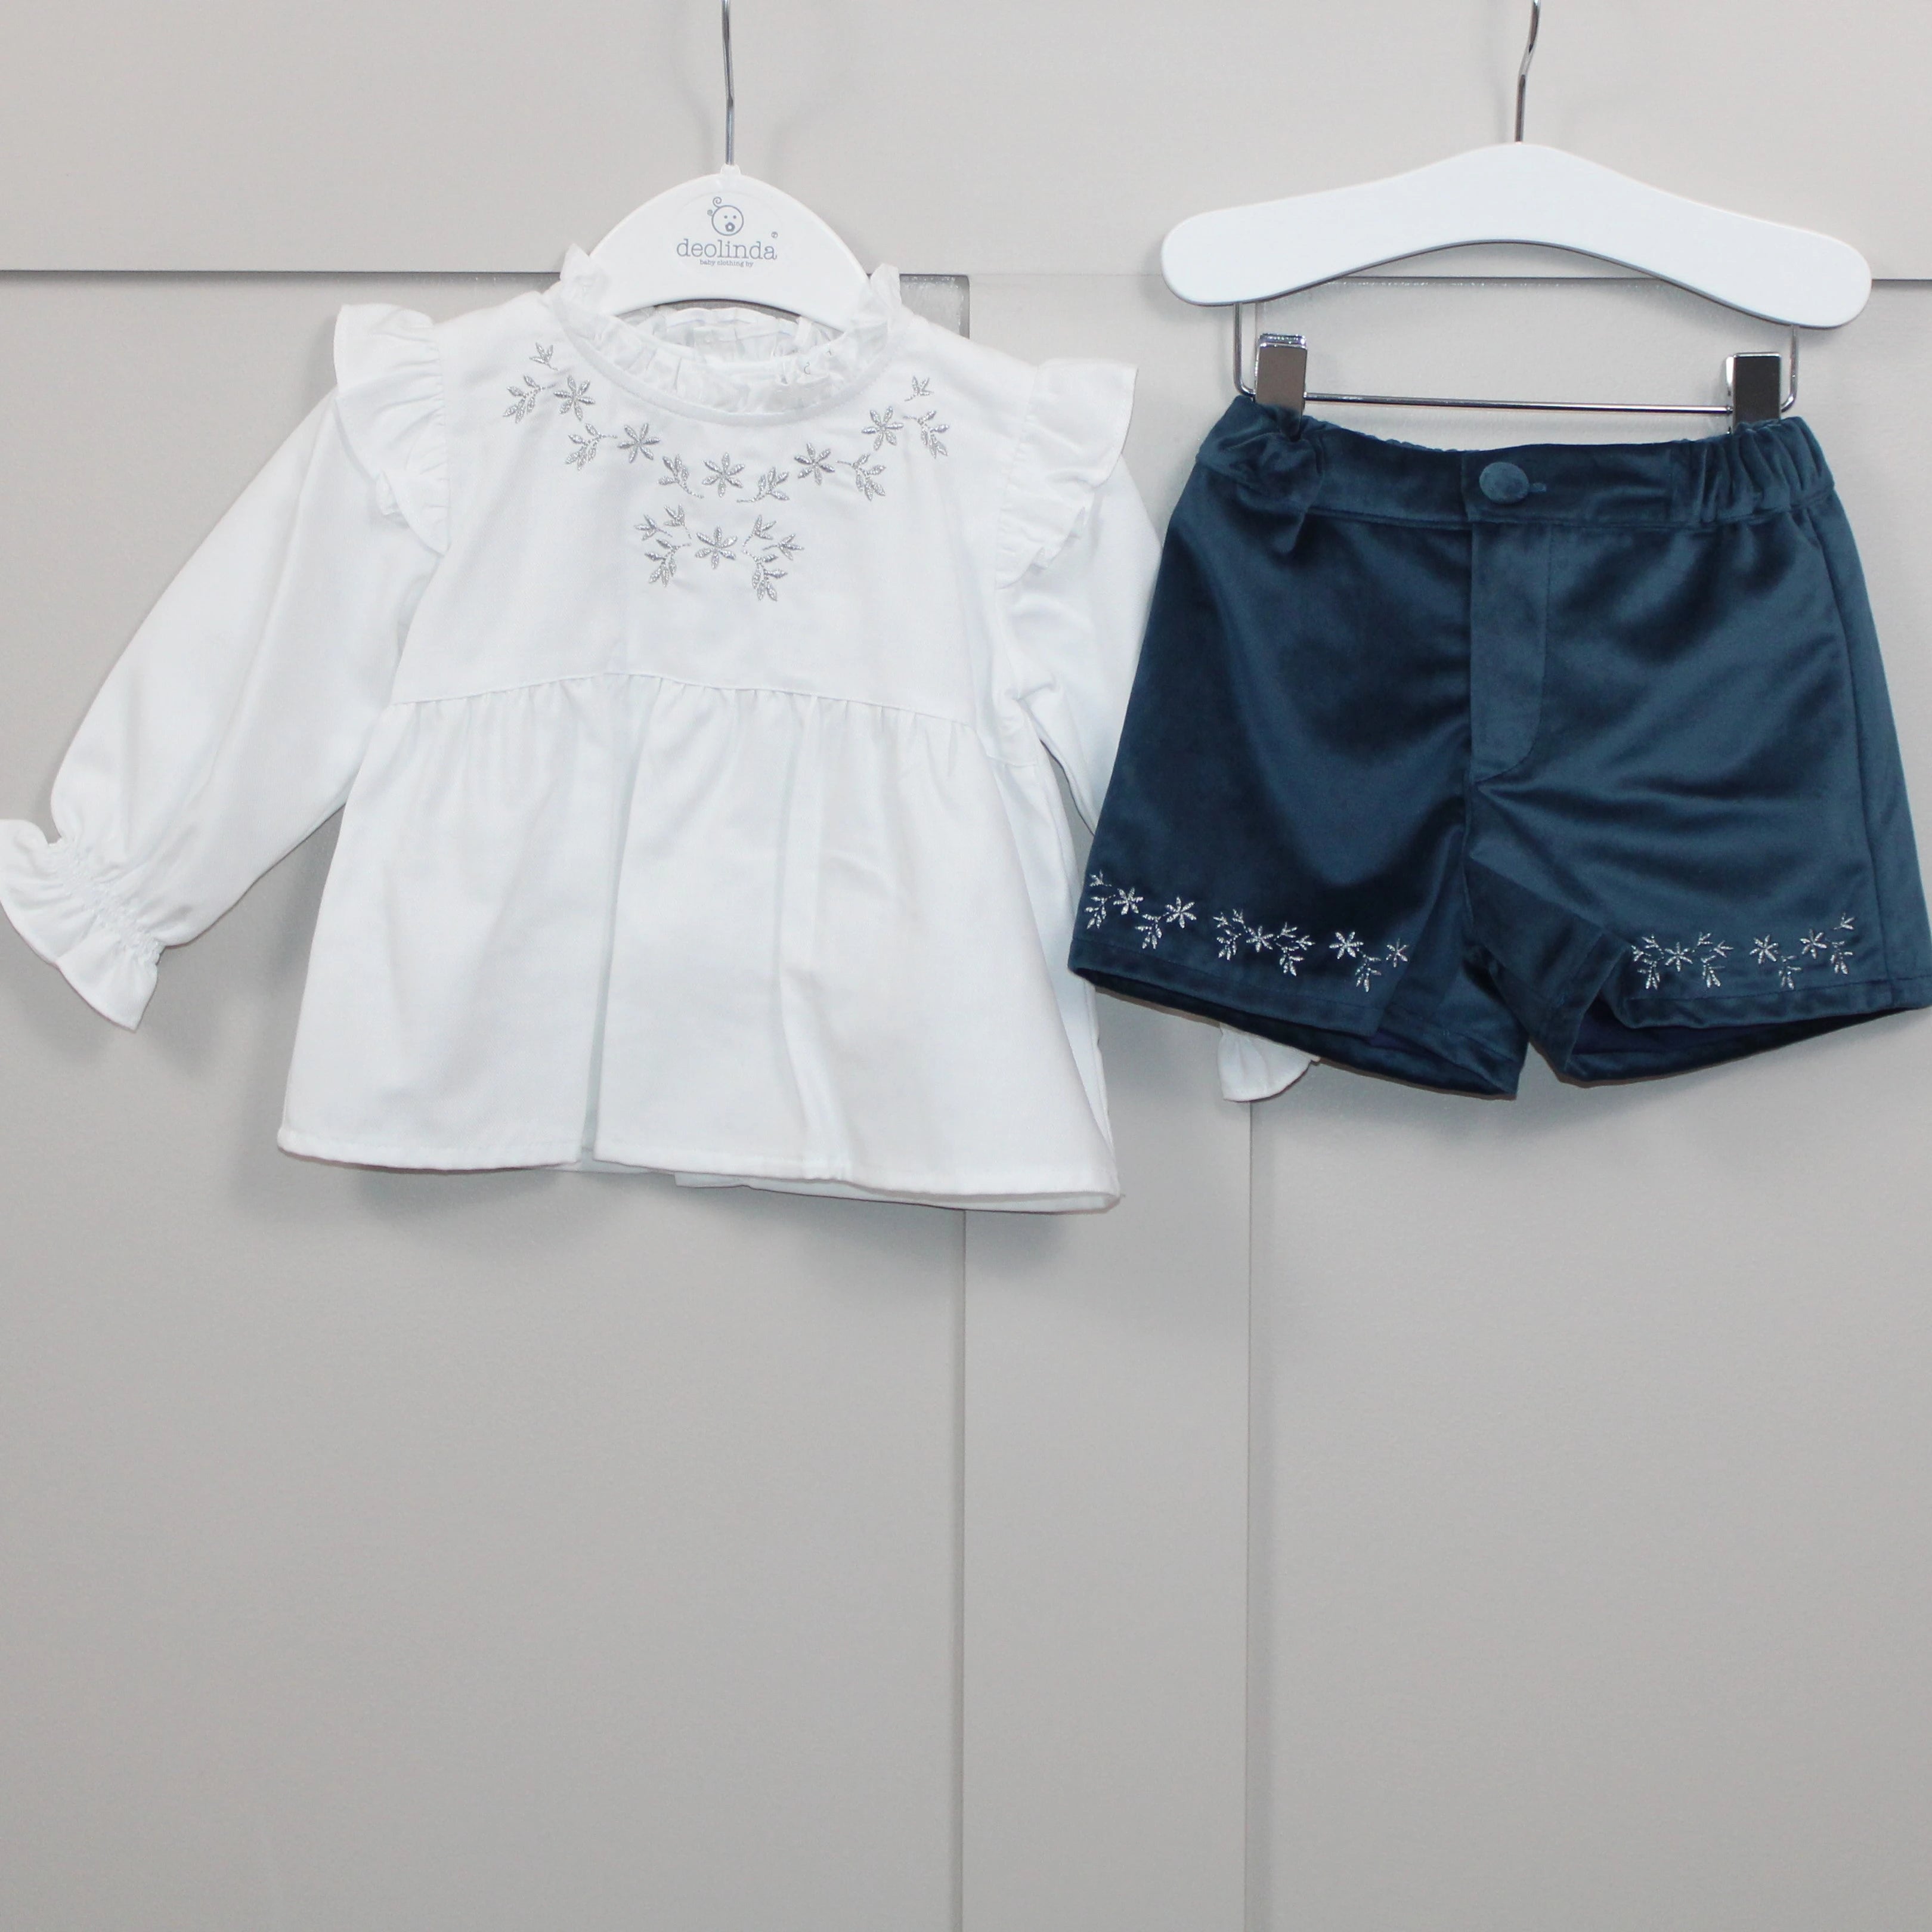 deolinda navy velour shorts and blouse set 